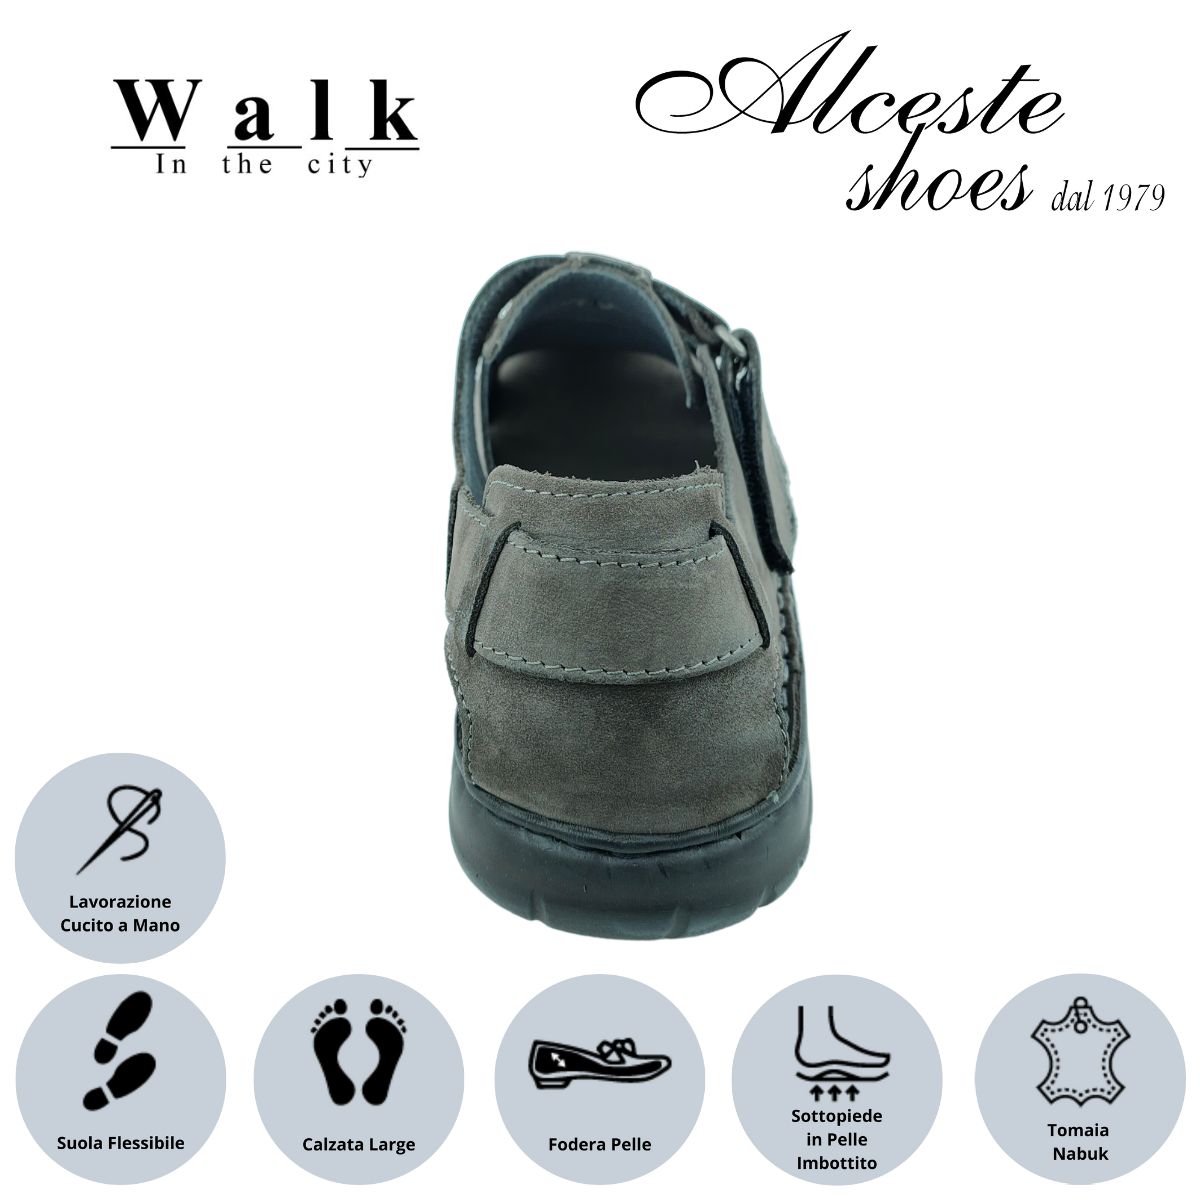 Sandalo Uomo Chiusura con Velcro "Walk in The City" Art. 20910 Nabuk Piombo Alceste Shoes 24